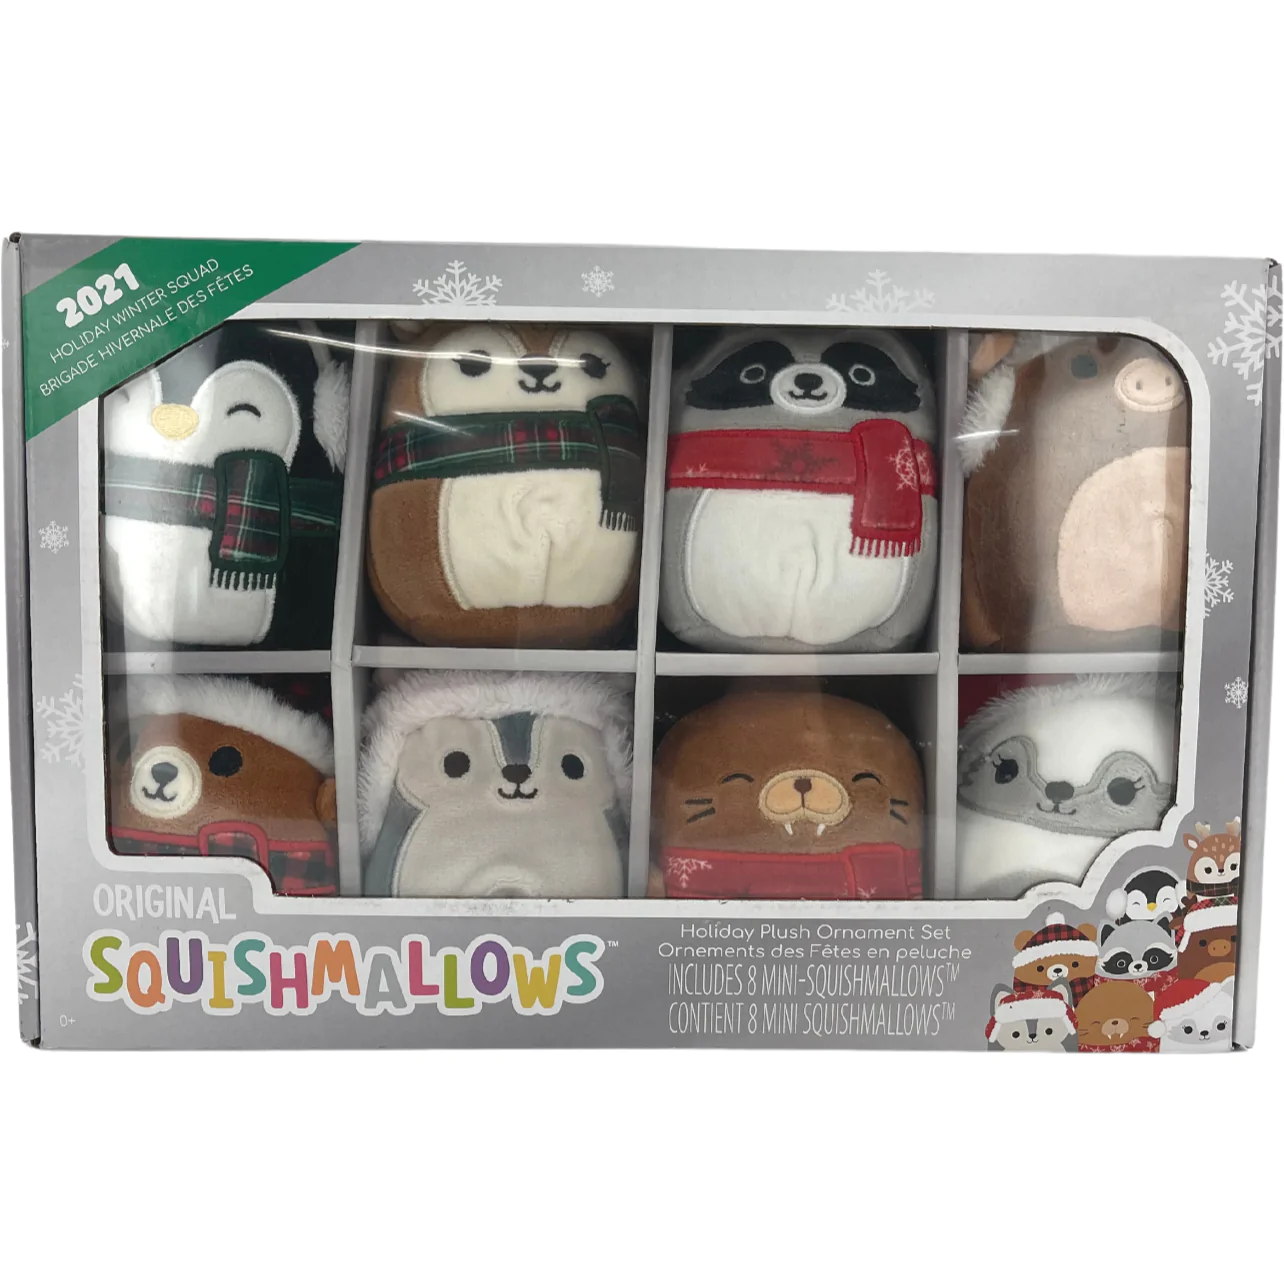 Squishmallows Holiday Plush Ornament Set / 8 Mini Squishmallows / 2021 Holiday Winter Squad